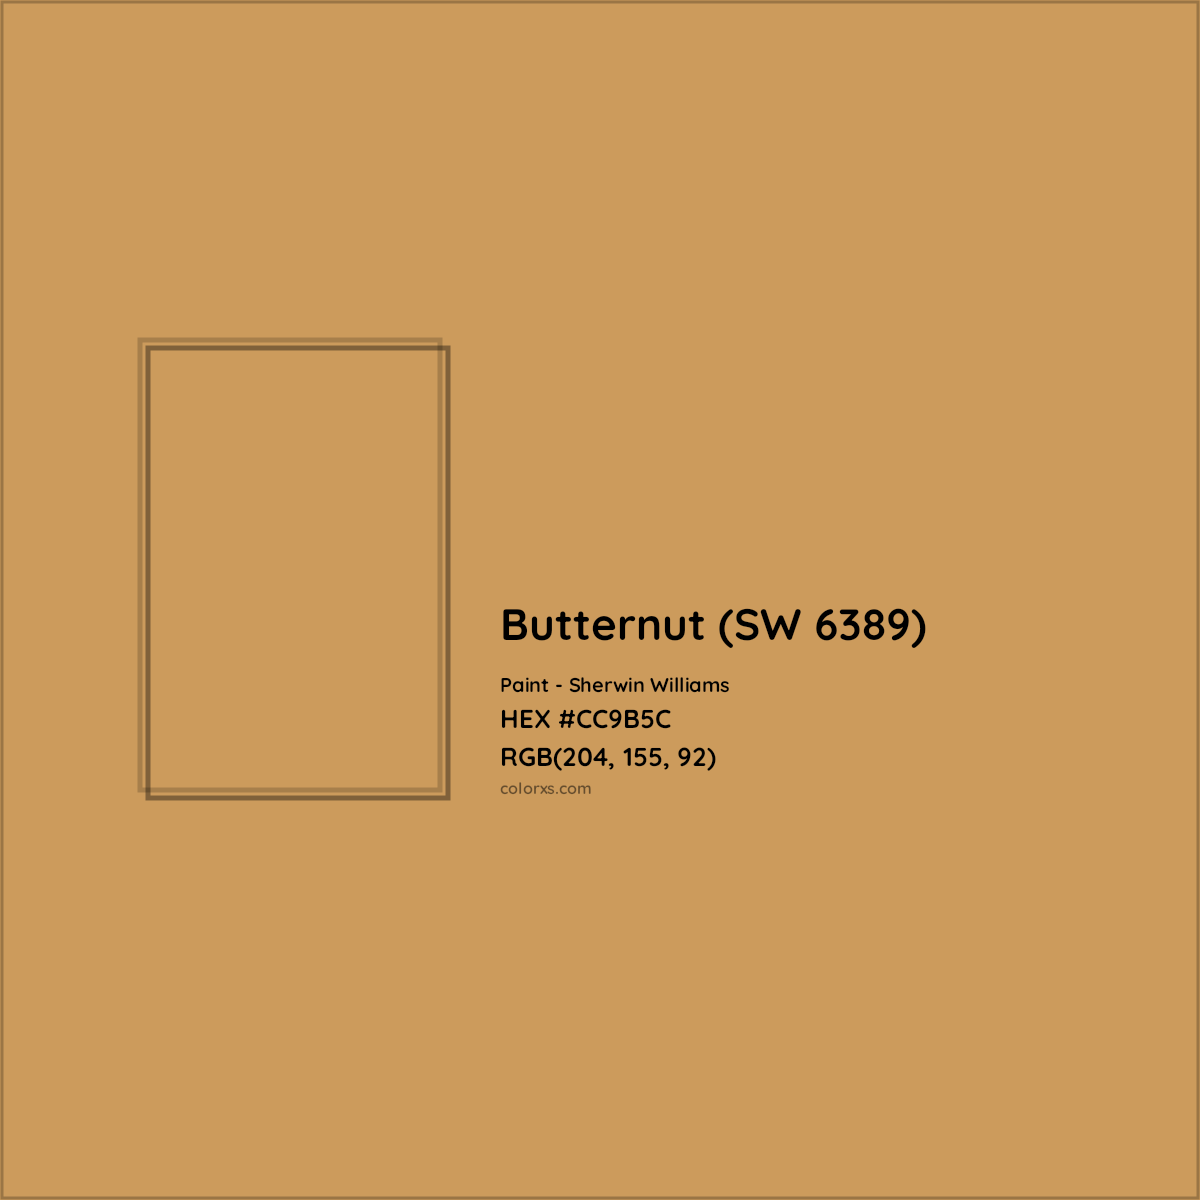 HEX #CC9B5C Butternut (SW 6389) Paint Sherwin Williams - Color Code